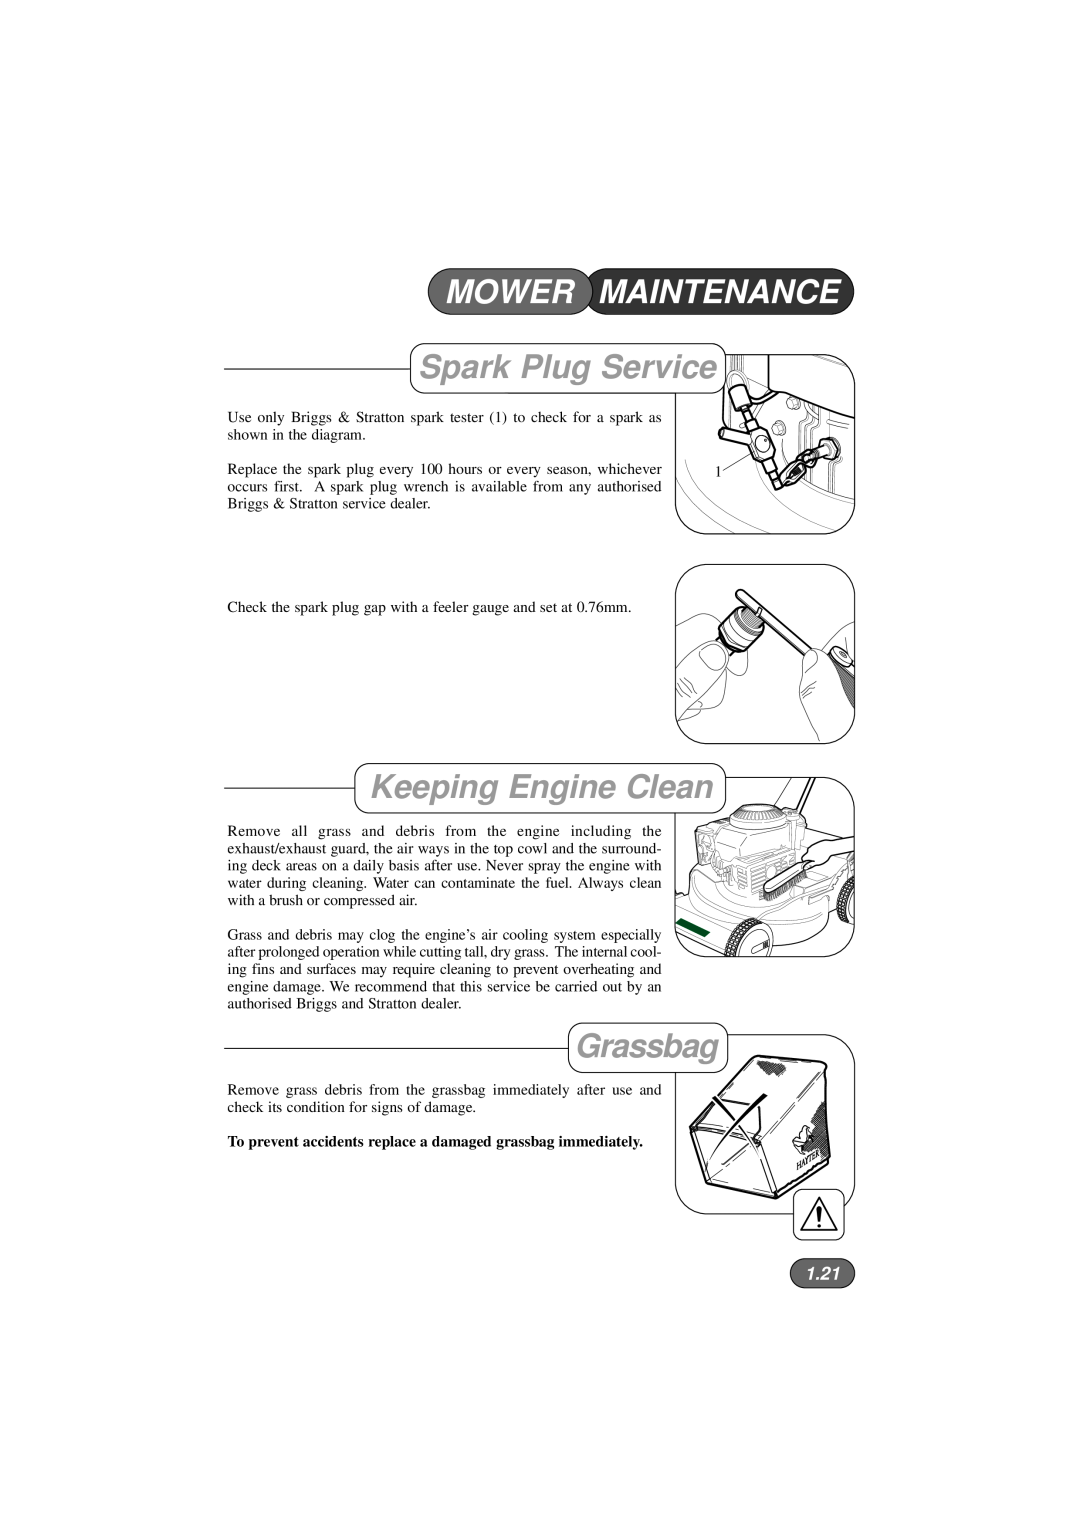 Hayter Mowers 422V, 423V, 424V manual Spark Plug Service, Keeping Engine Clean, 1.21, Mower Maintenance, Grassbag 